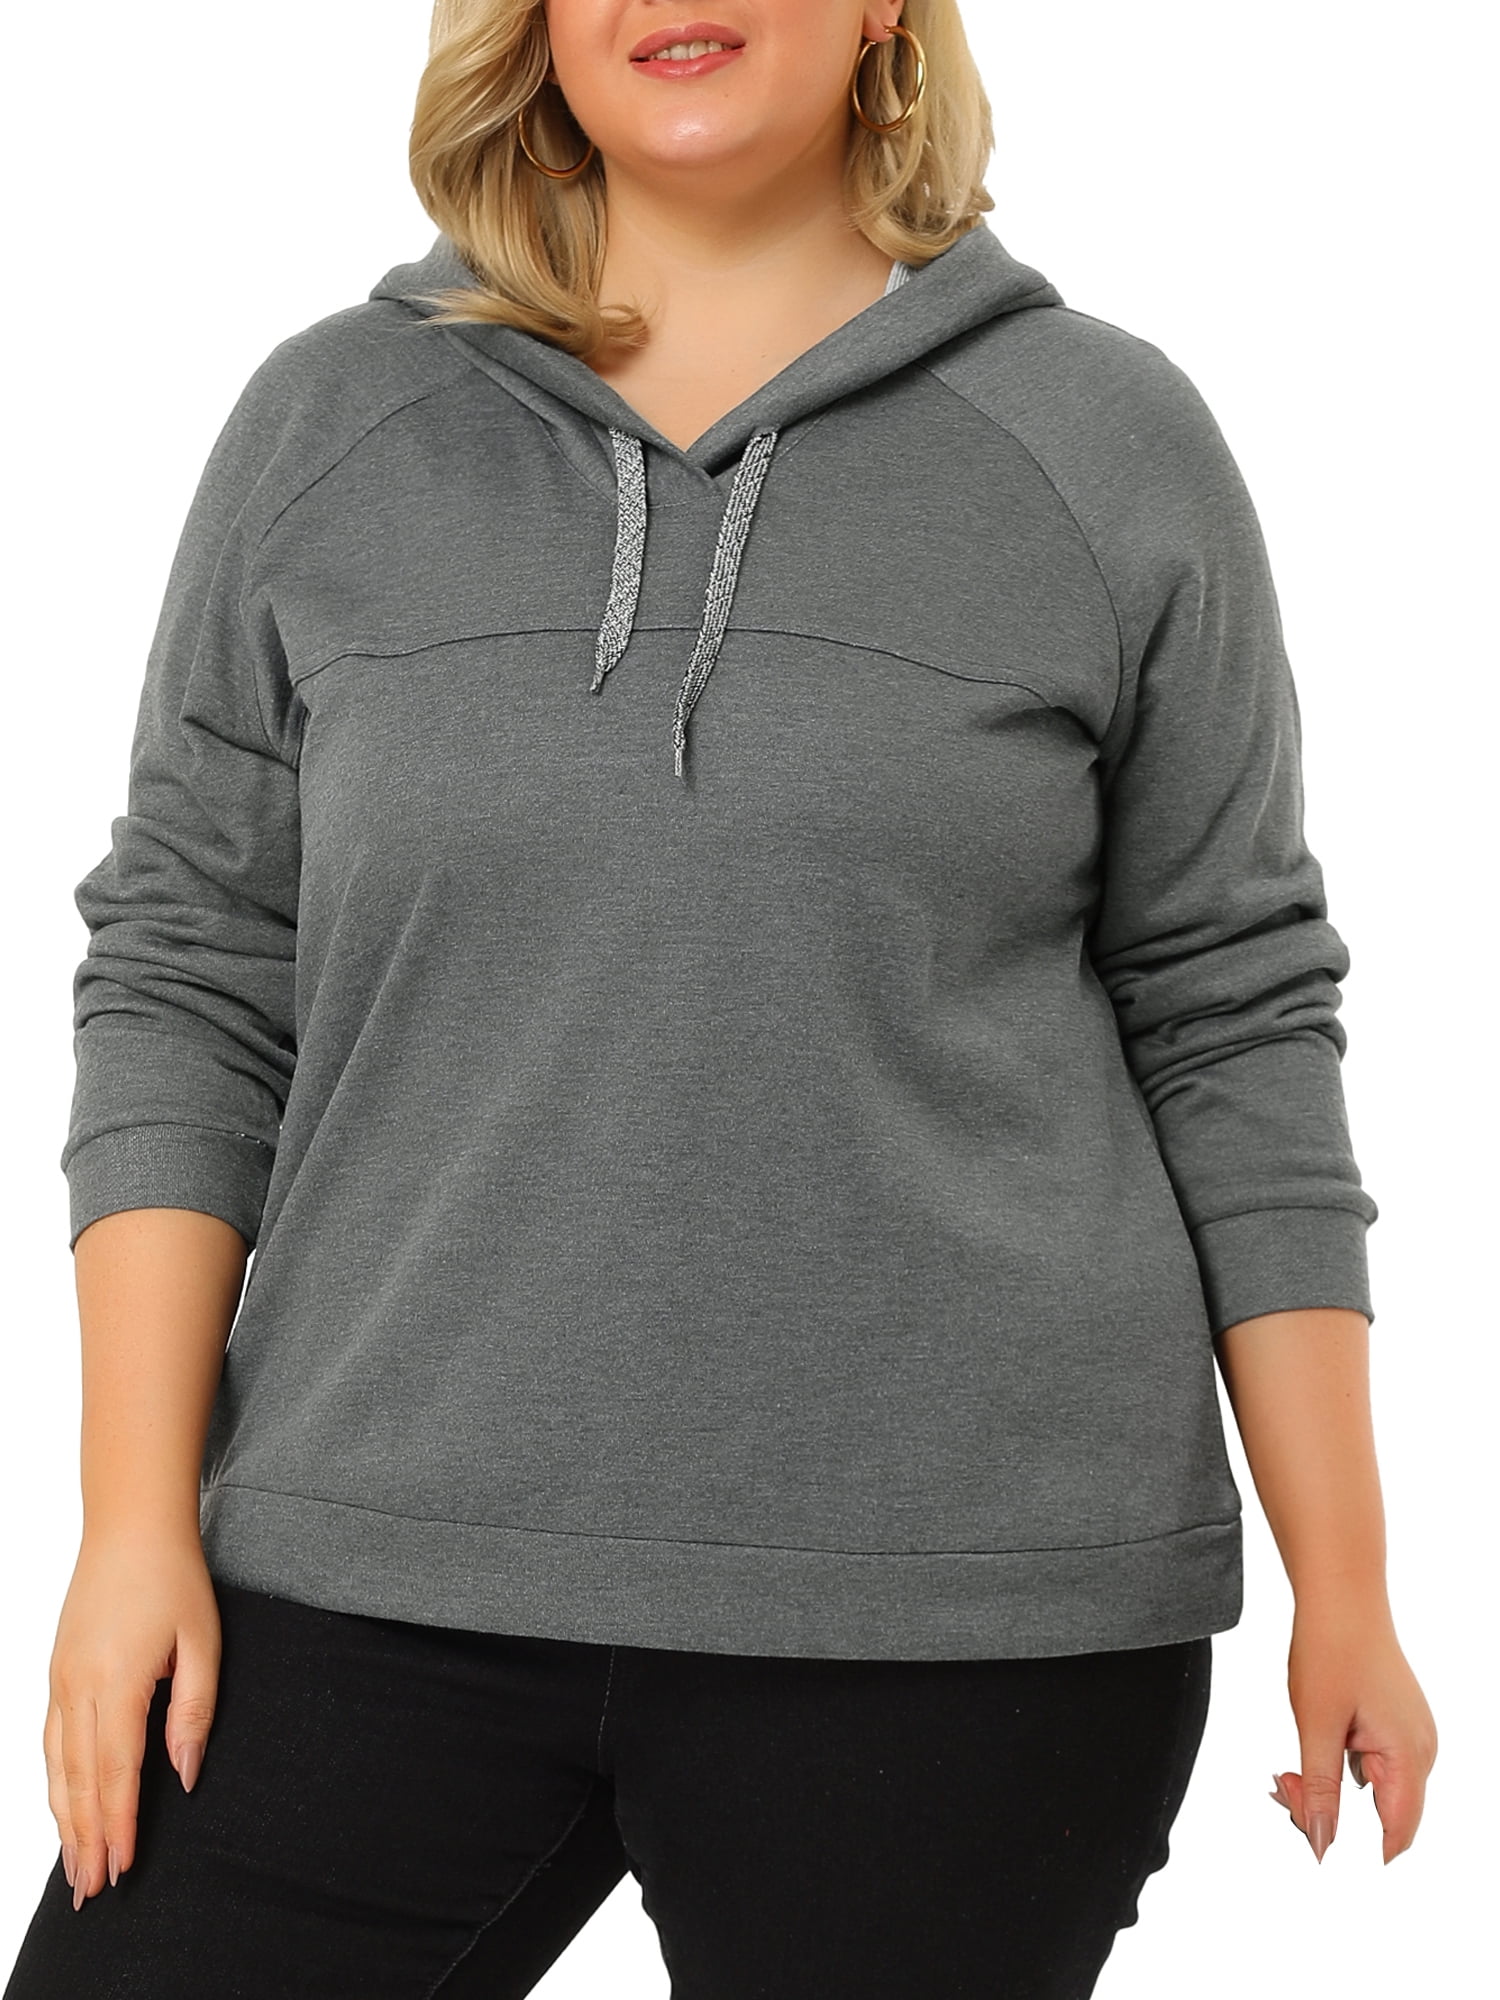 Women Men Baggy Printed Sweatshirt Plus Size Casual Pullover Gym Sports Hoodie 